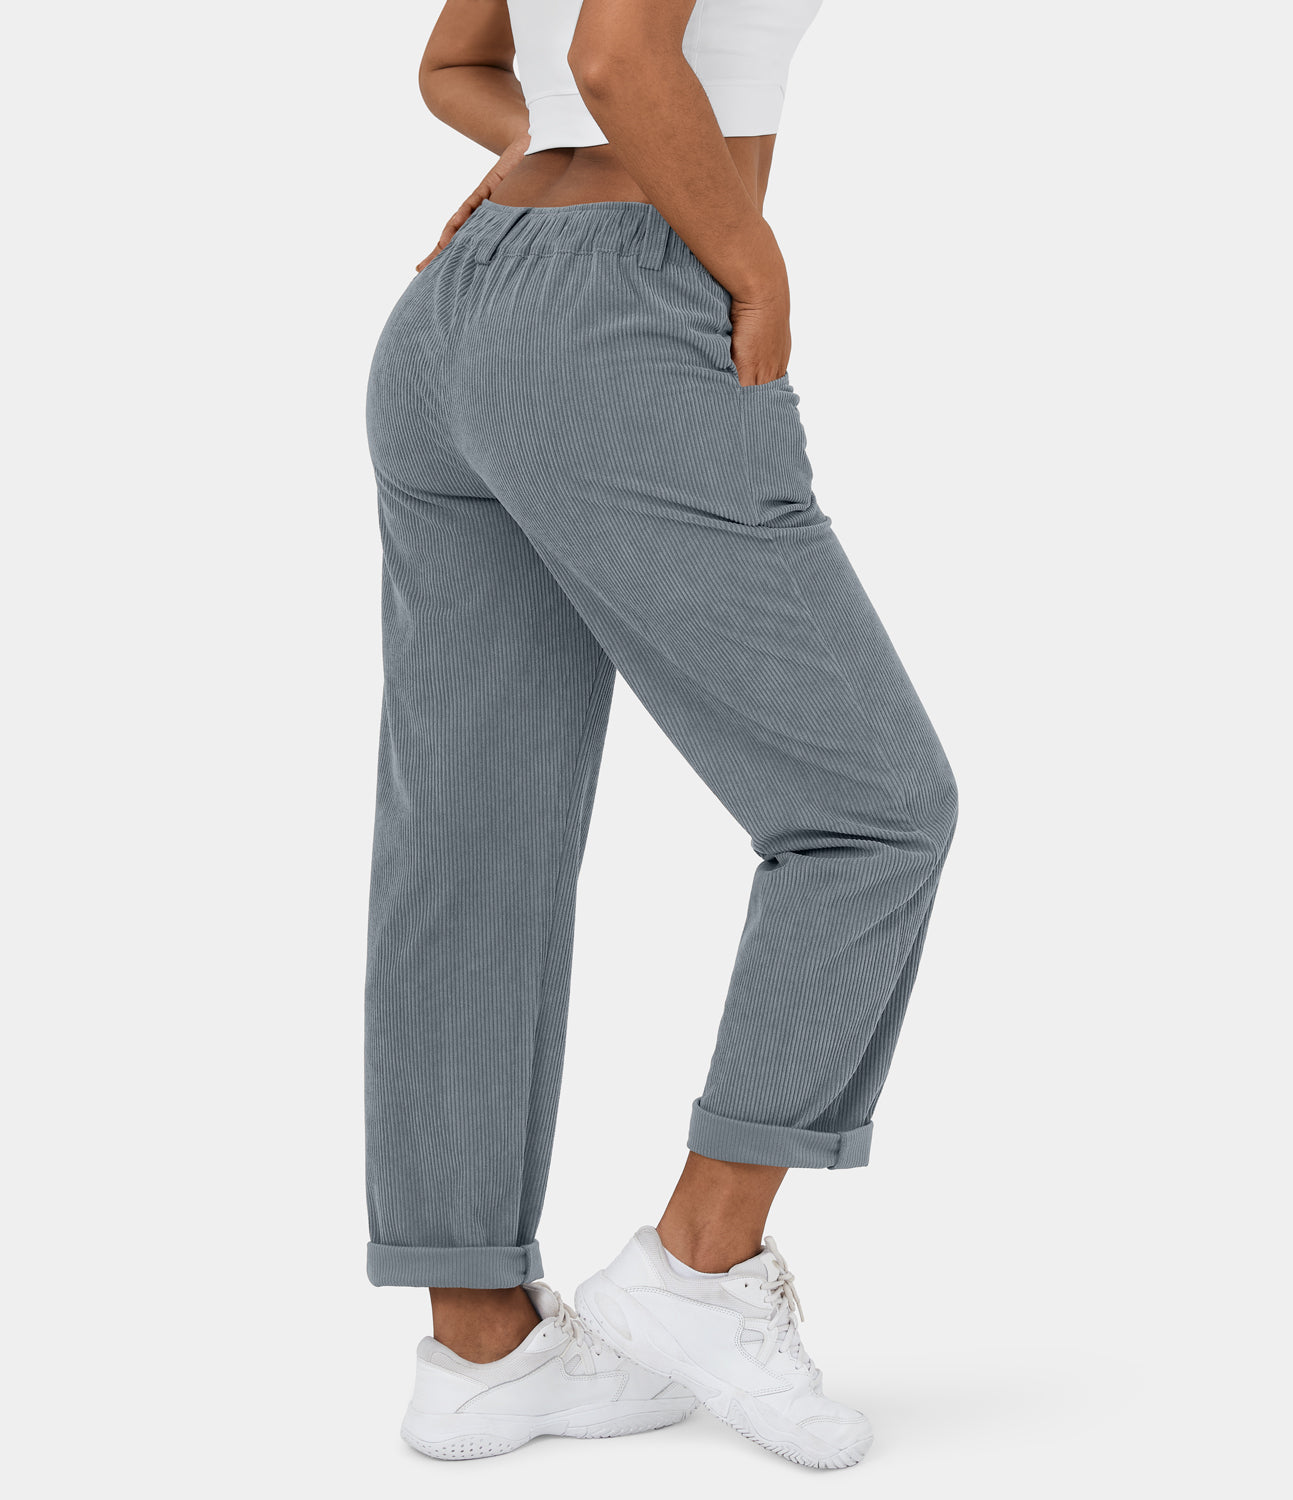 Women's Mid Rise Button Zipper Side Pocket Corduroy Casual Pants